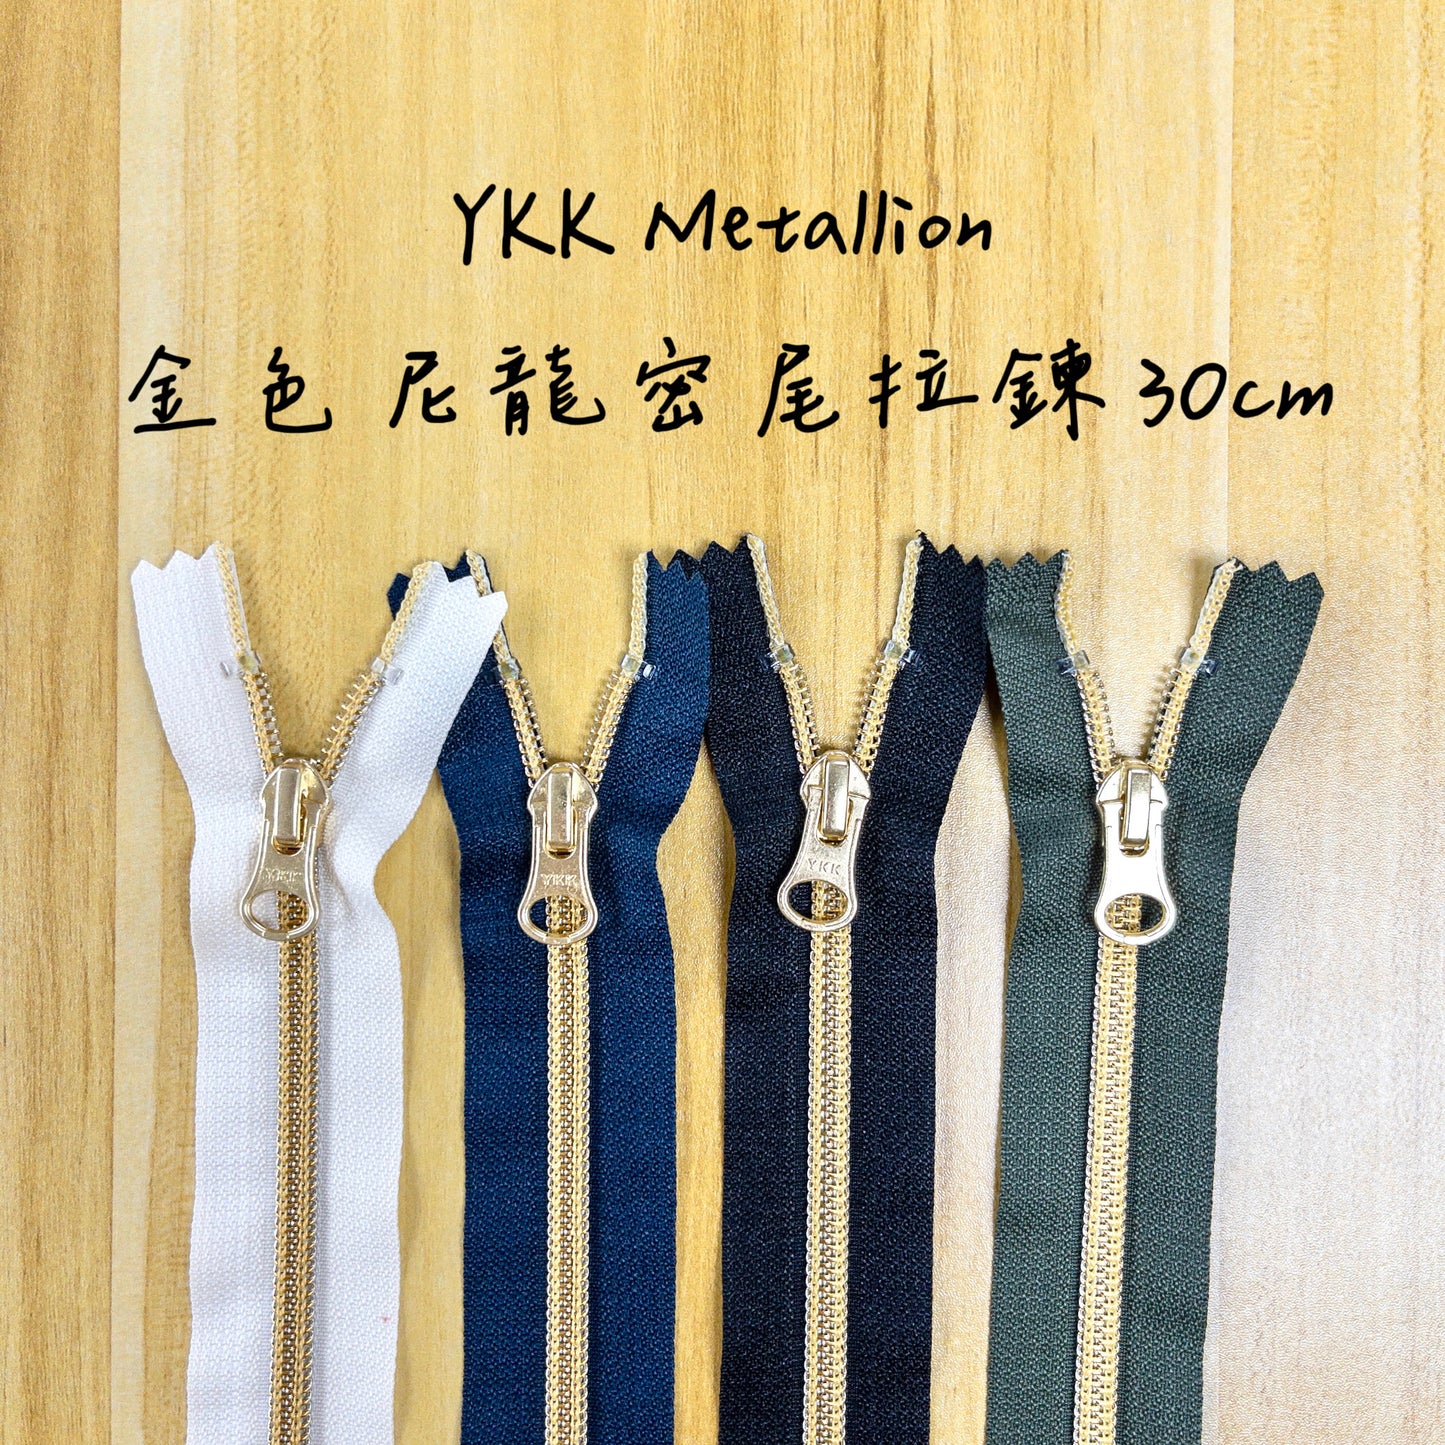 YKK Metallion Gold Coil Nylon close end zipper 30cm 4 colors YKK 金色尼龍密尾拉鍊 30cm 4色